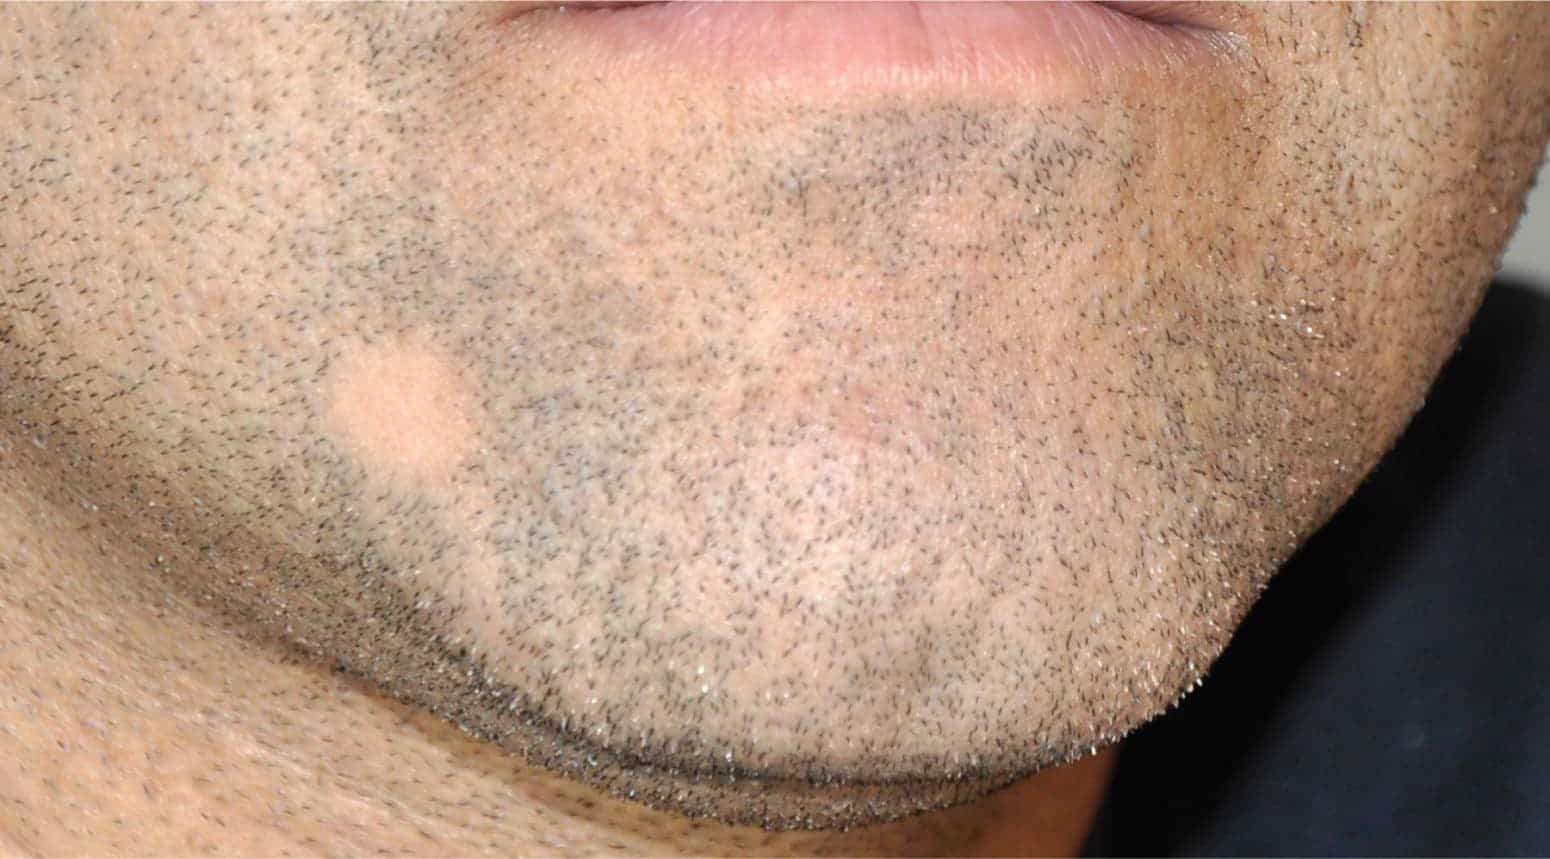 Beard rogaine bald spots for Definitive Guide